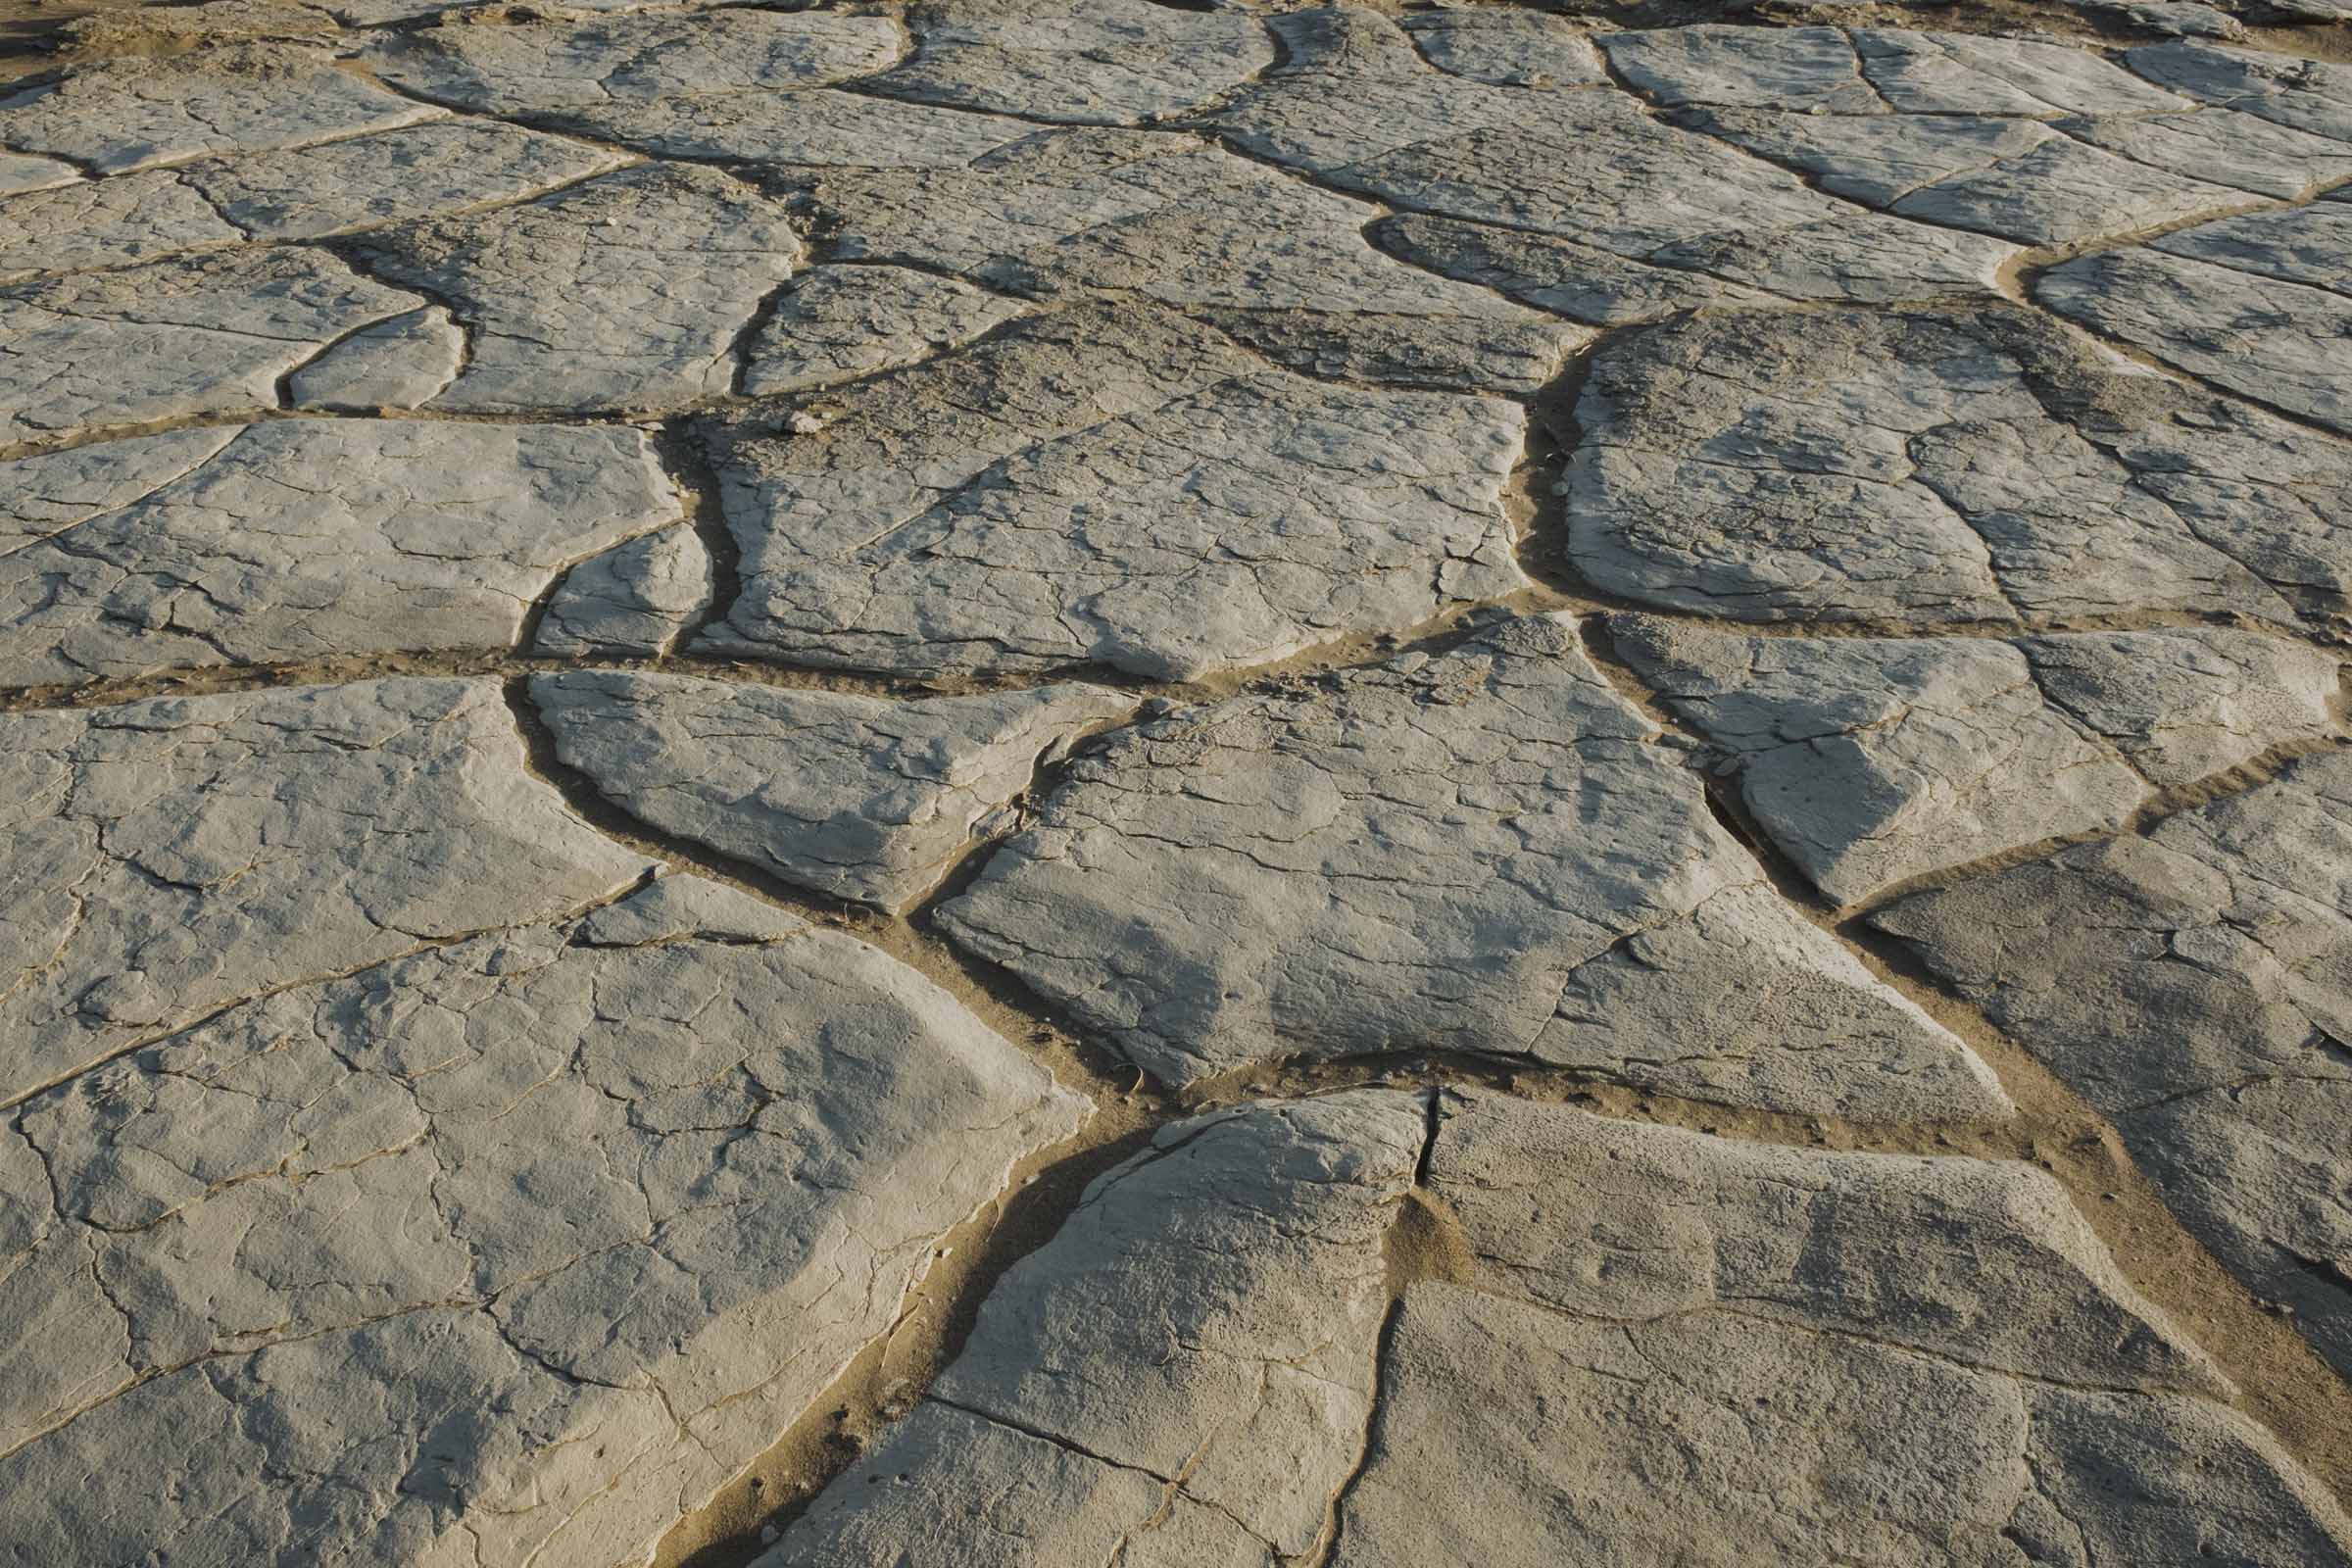 Cracked mud floors in Death Valley